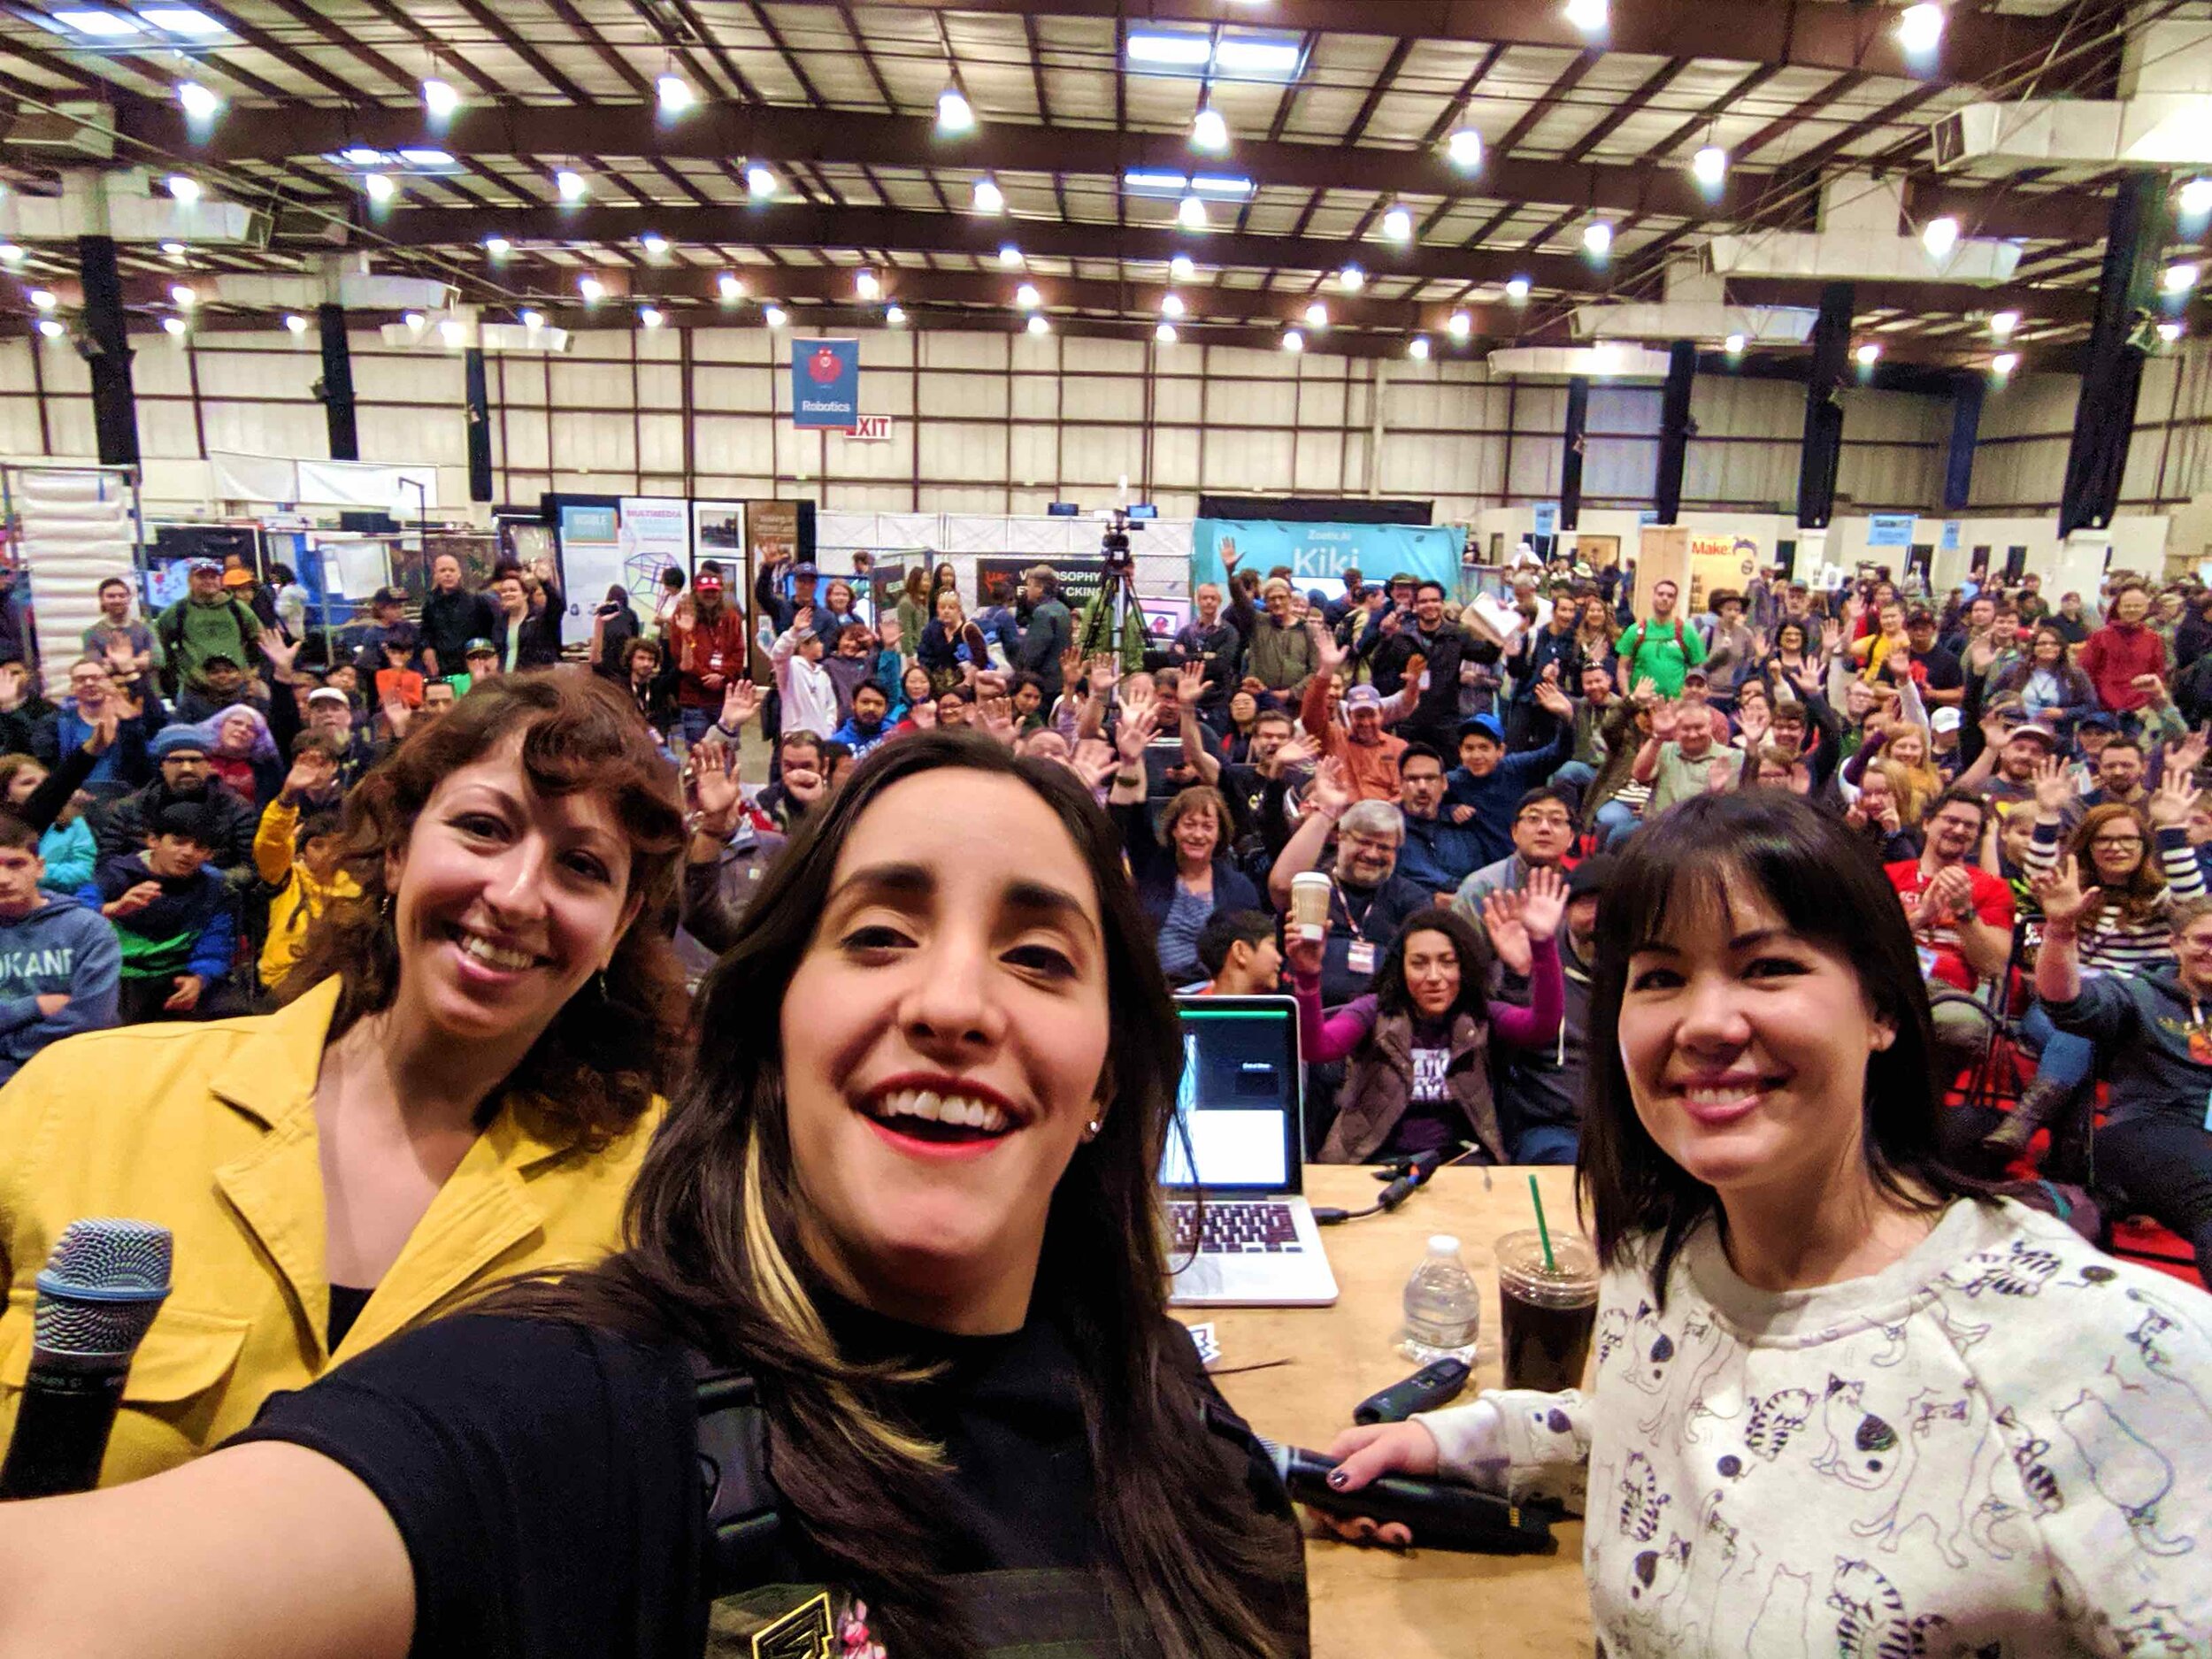 Jen Schachter, Estefannie, and Sophy Wong at Maker Faire - San Mateo, CA May 2019